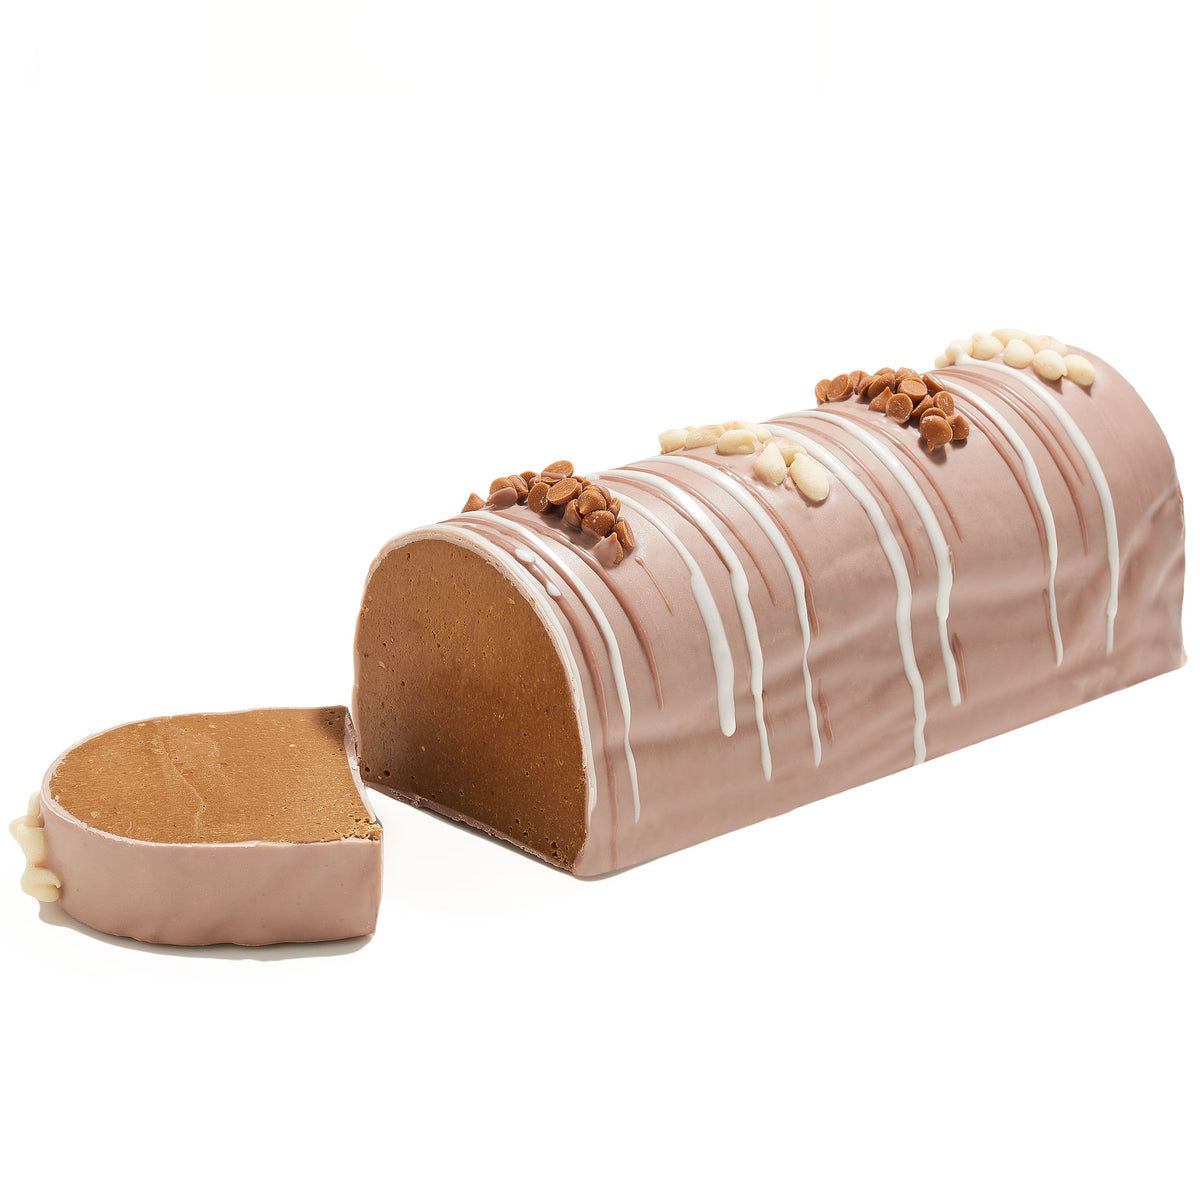 Coffee Fudge Log In Gift Box